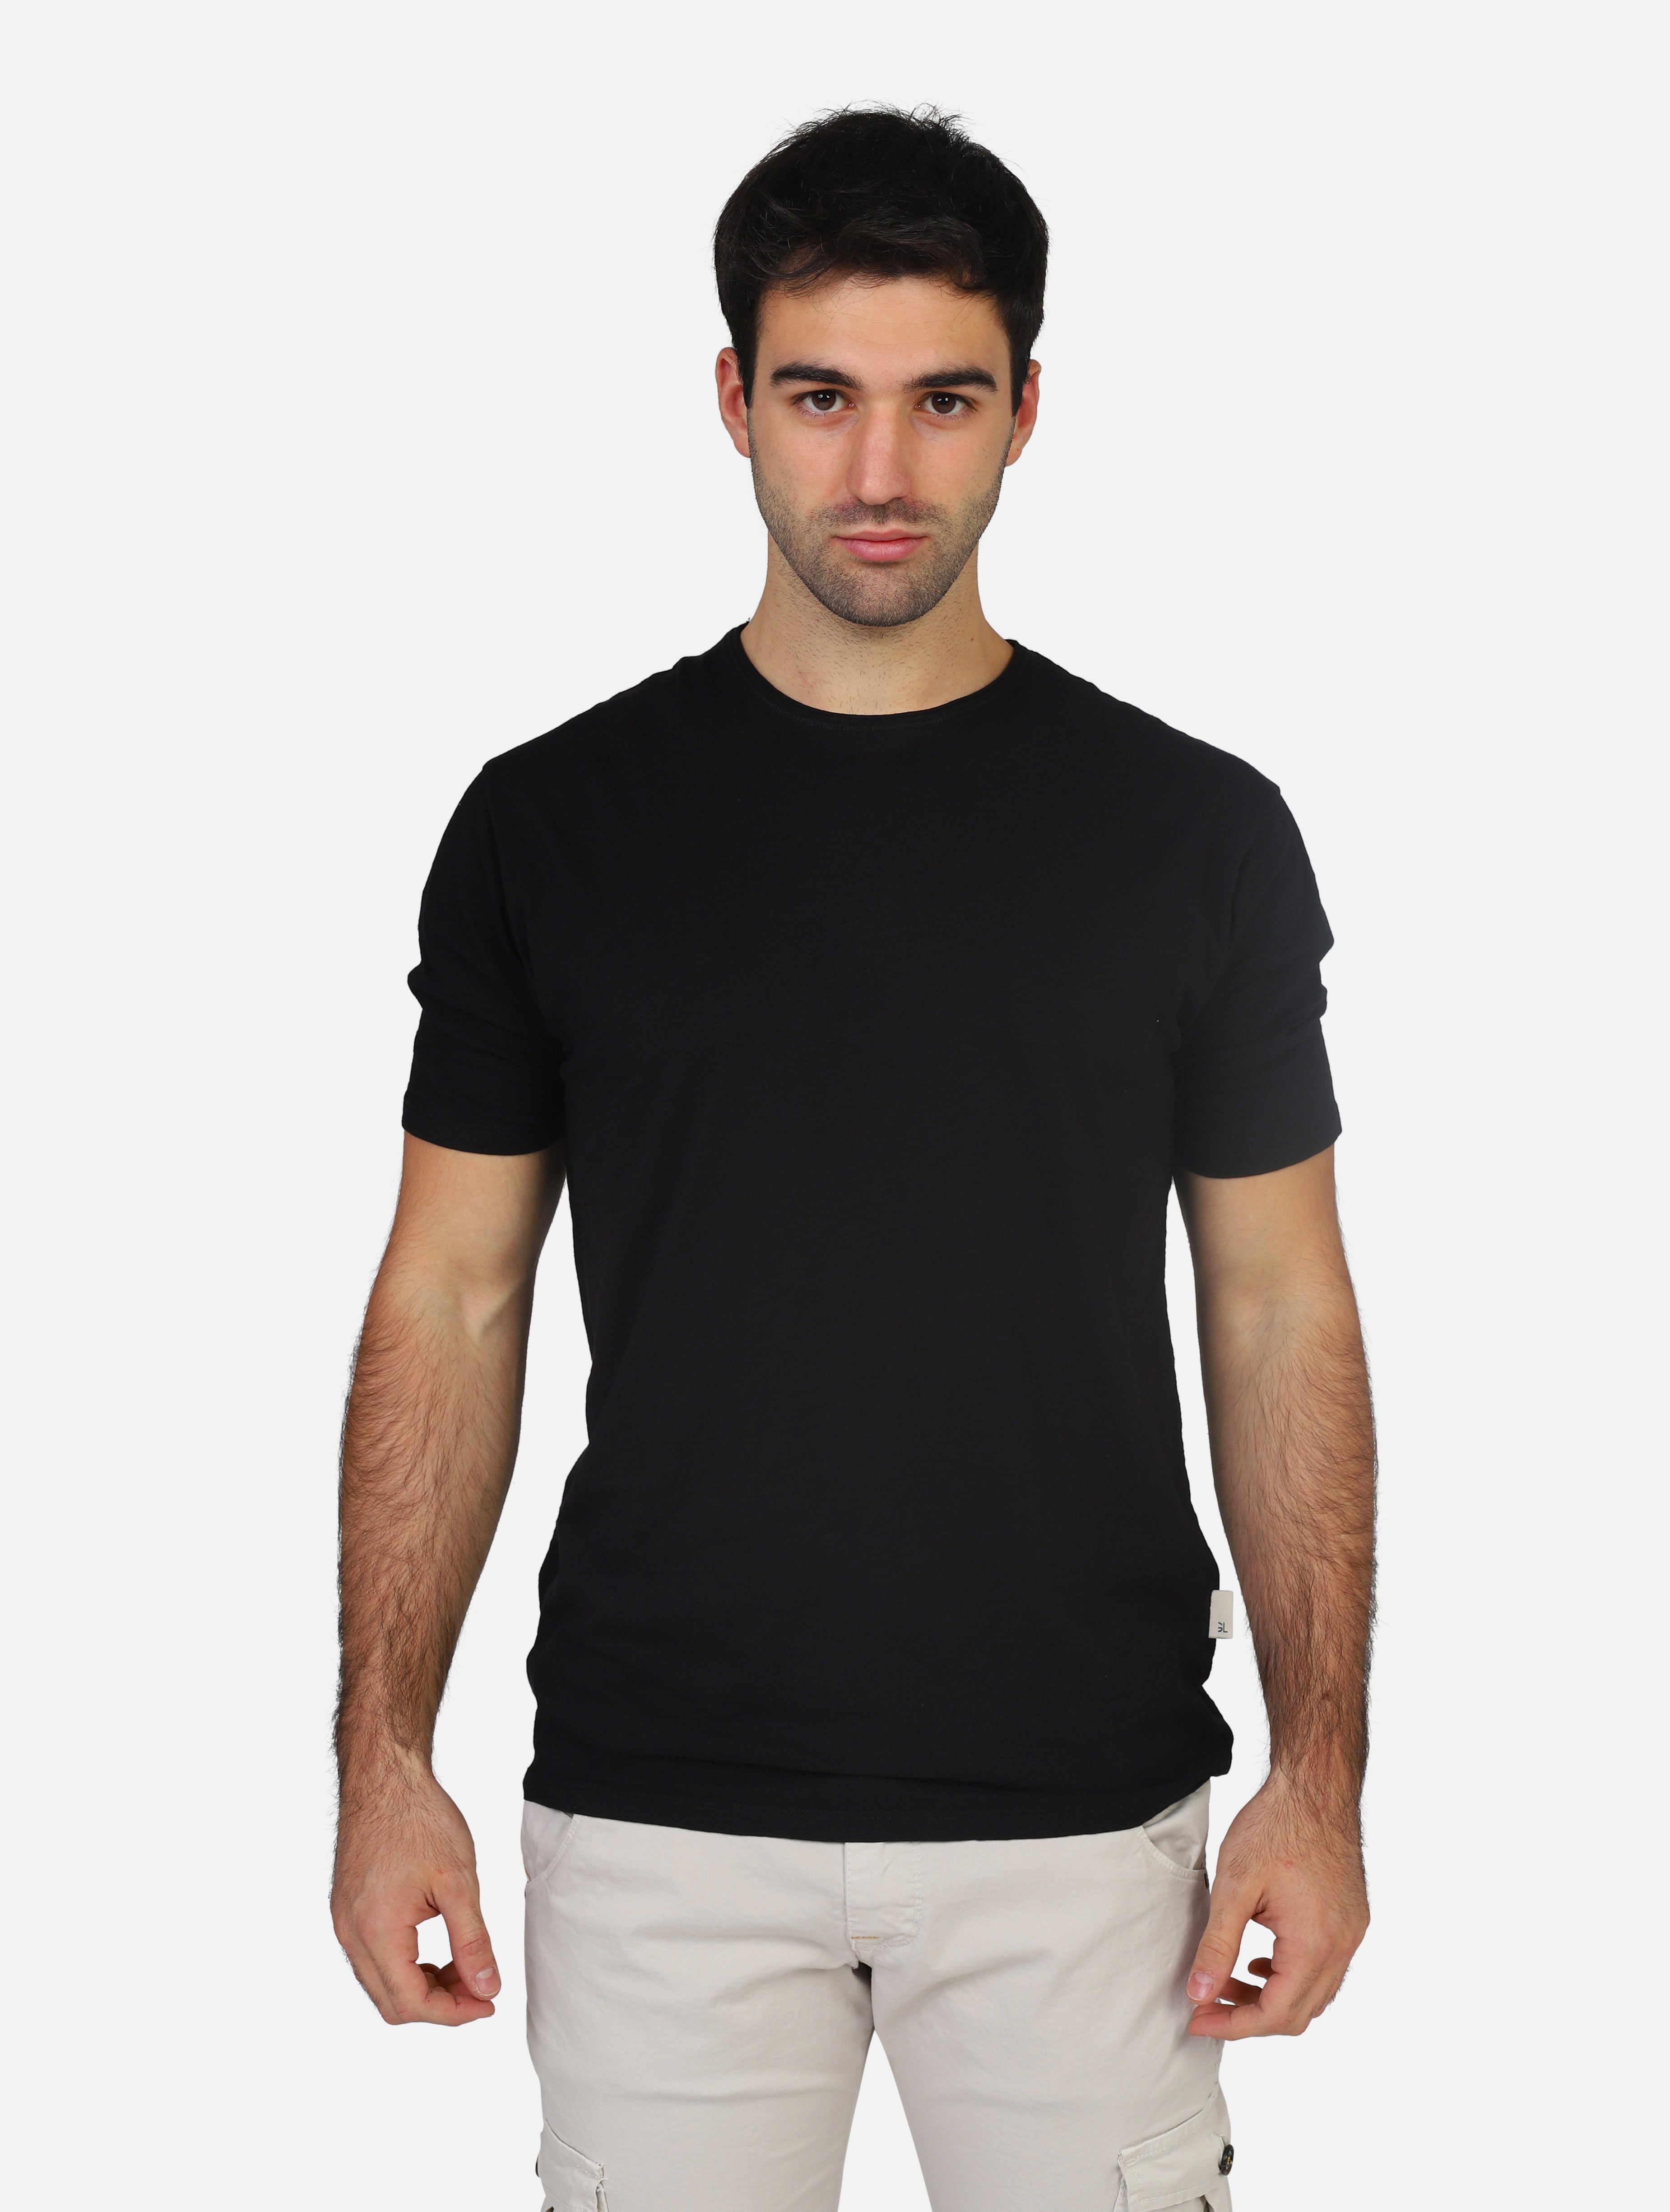 T-shirt gianni lupo  black uomo  - 1